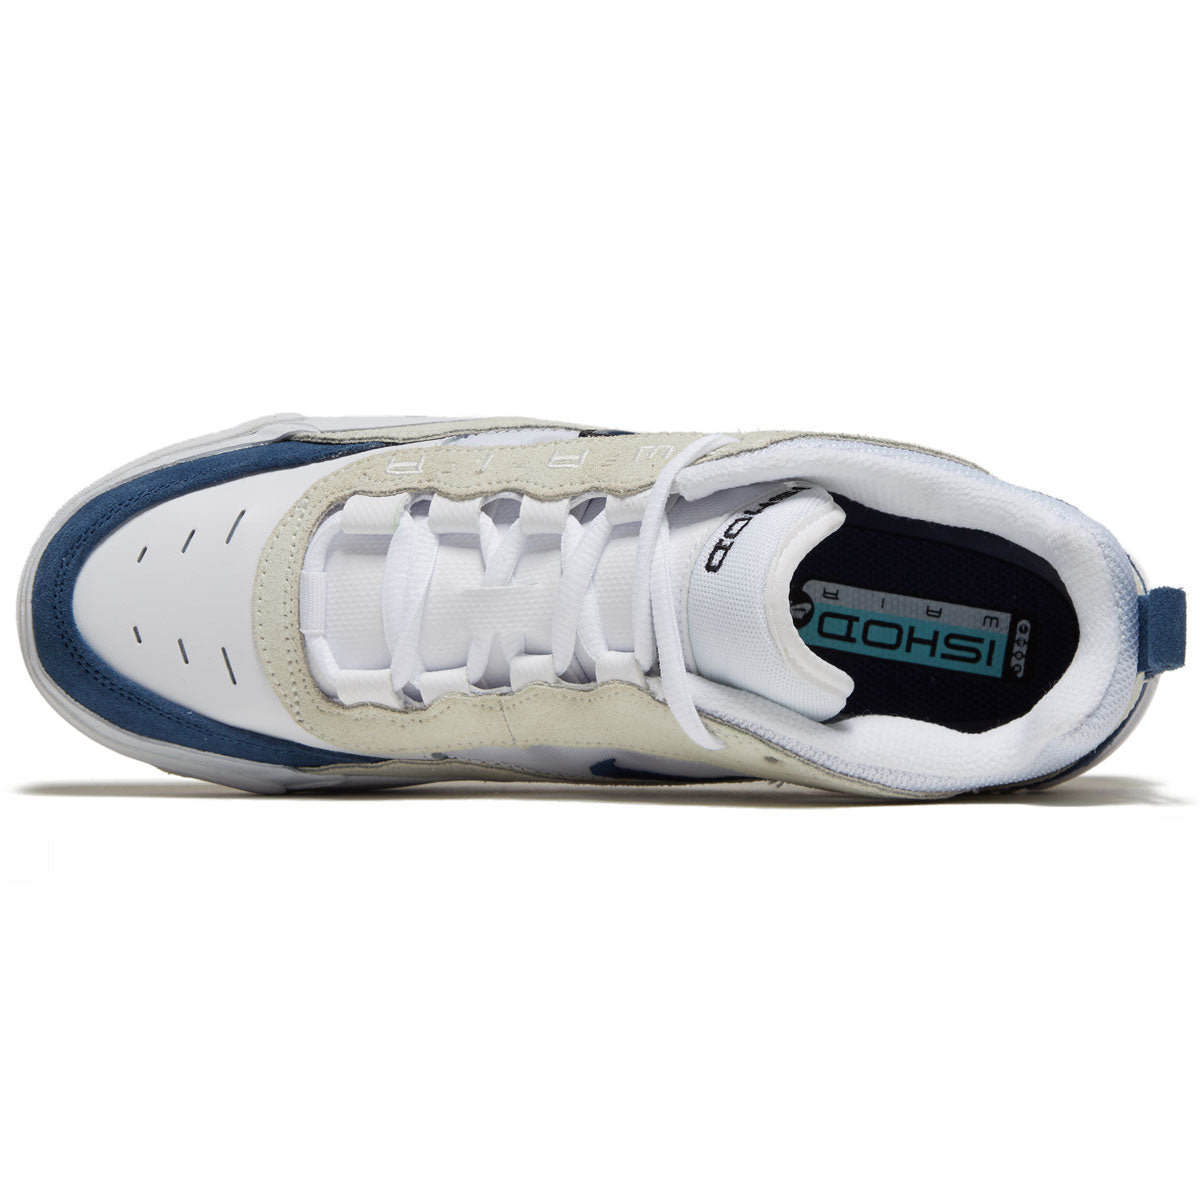 Nike SB Air Max Ishod Shoes - White/Navy/Summit White/Black image 3